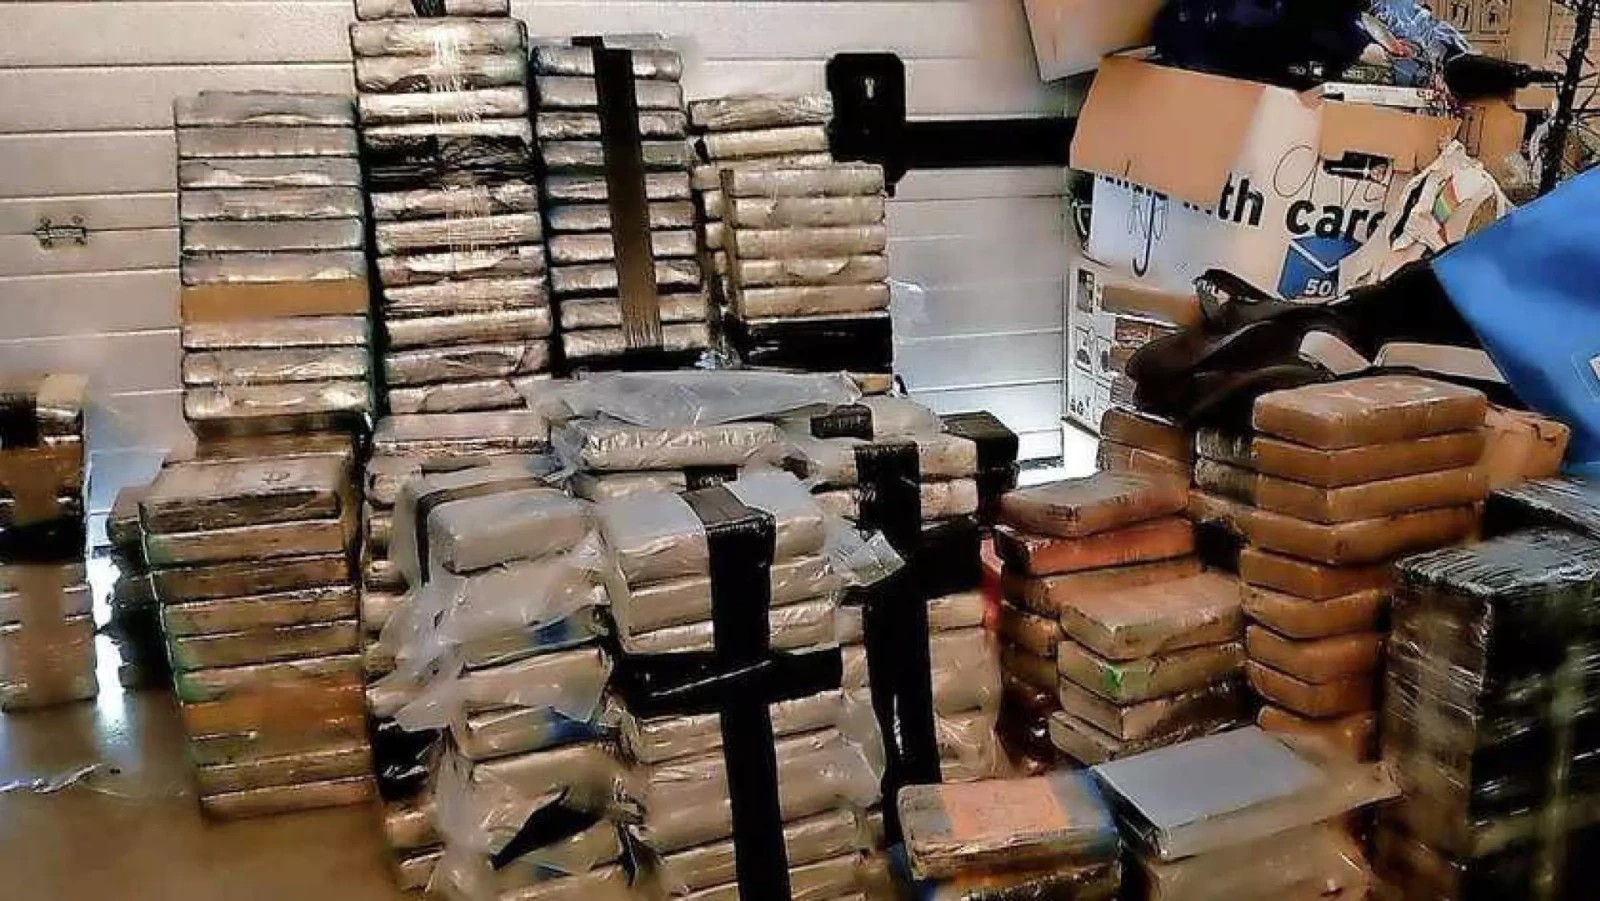 Amsterdamse politie vindt 3000 kilo coke en 11 miljoen euro in De Kwakel